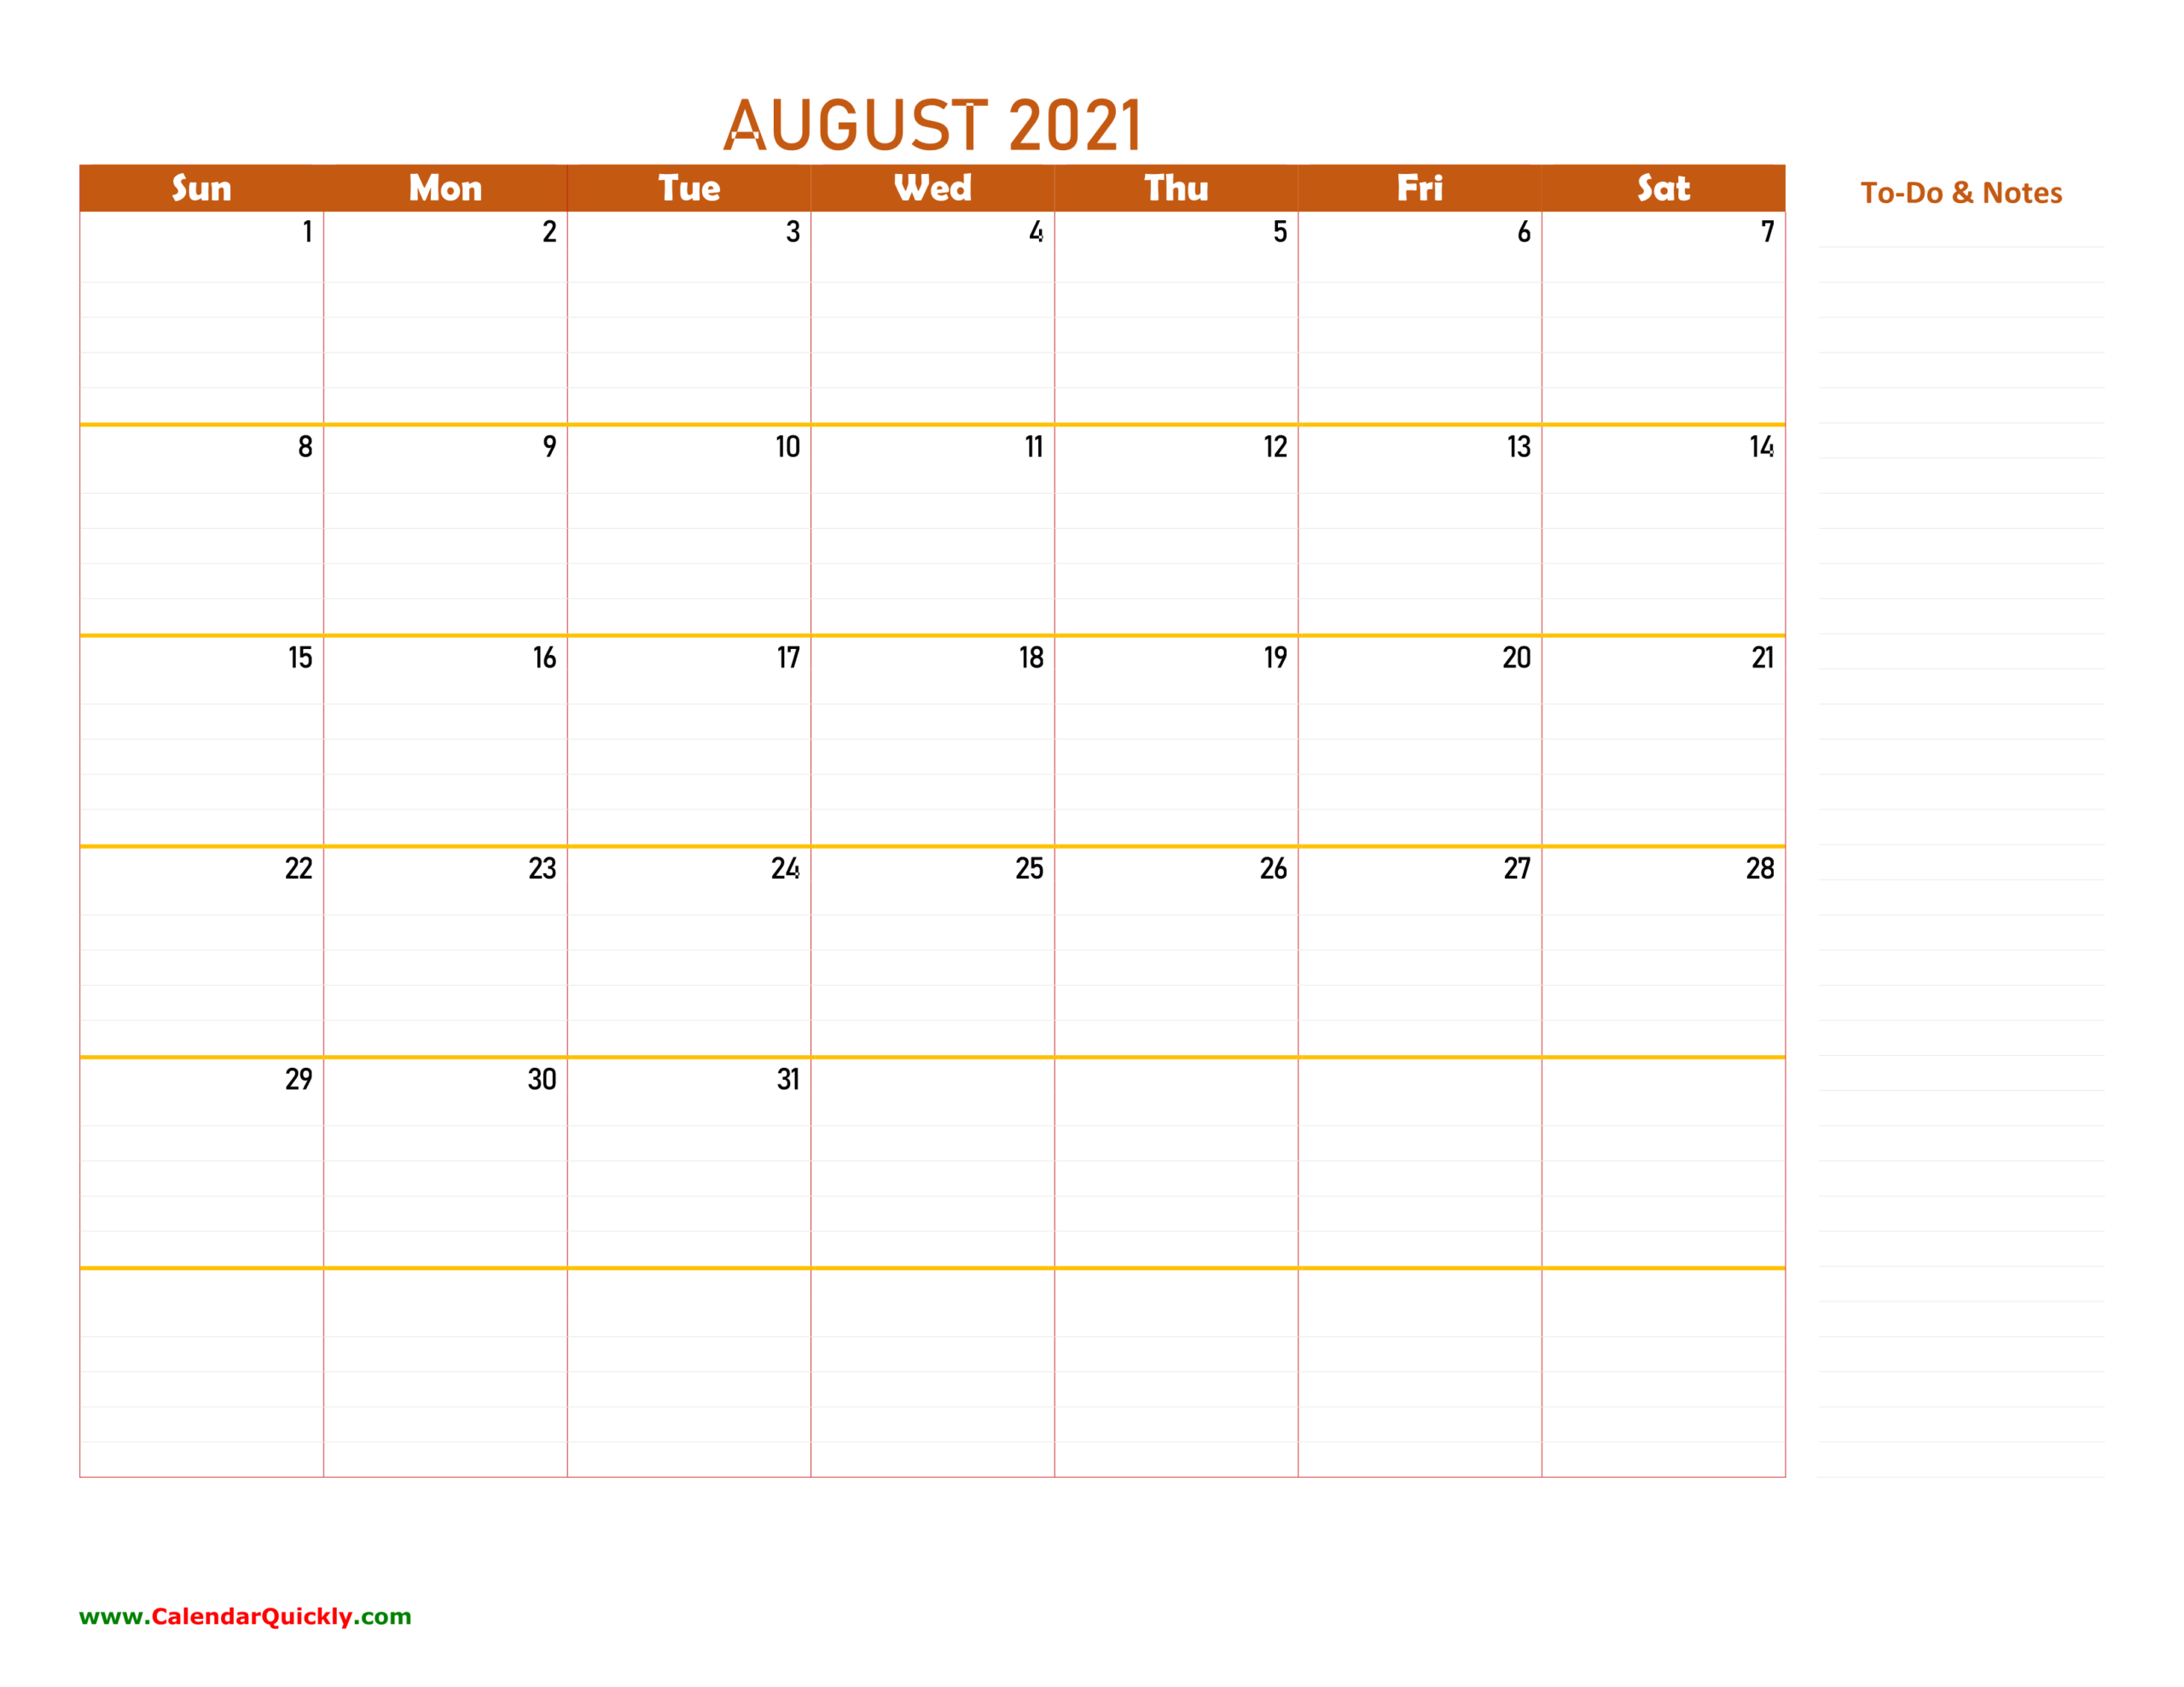 August 2021 Calendar | Calendar Quickly-Hourly Aug 2021 Calendar